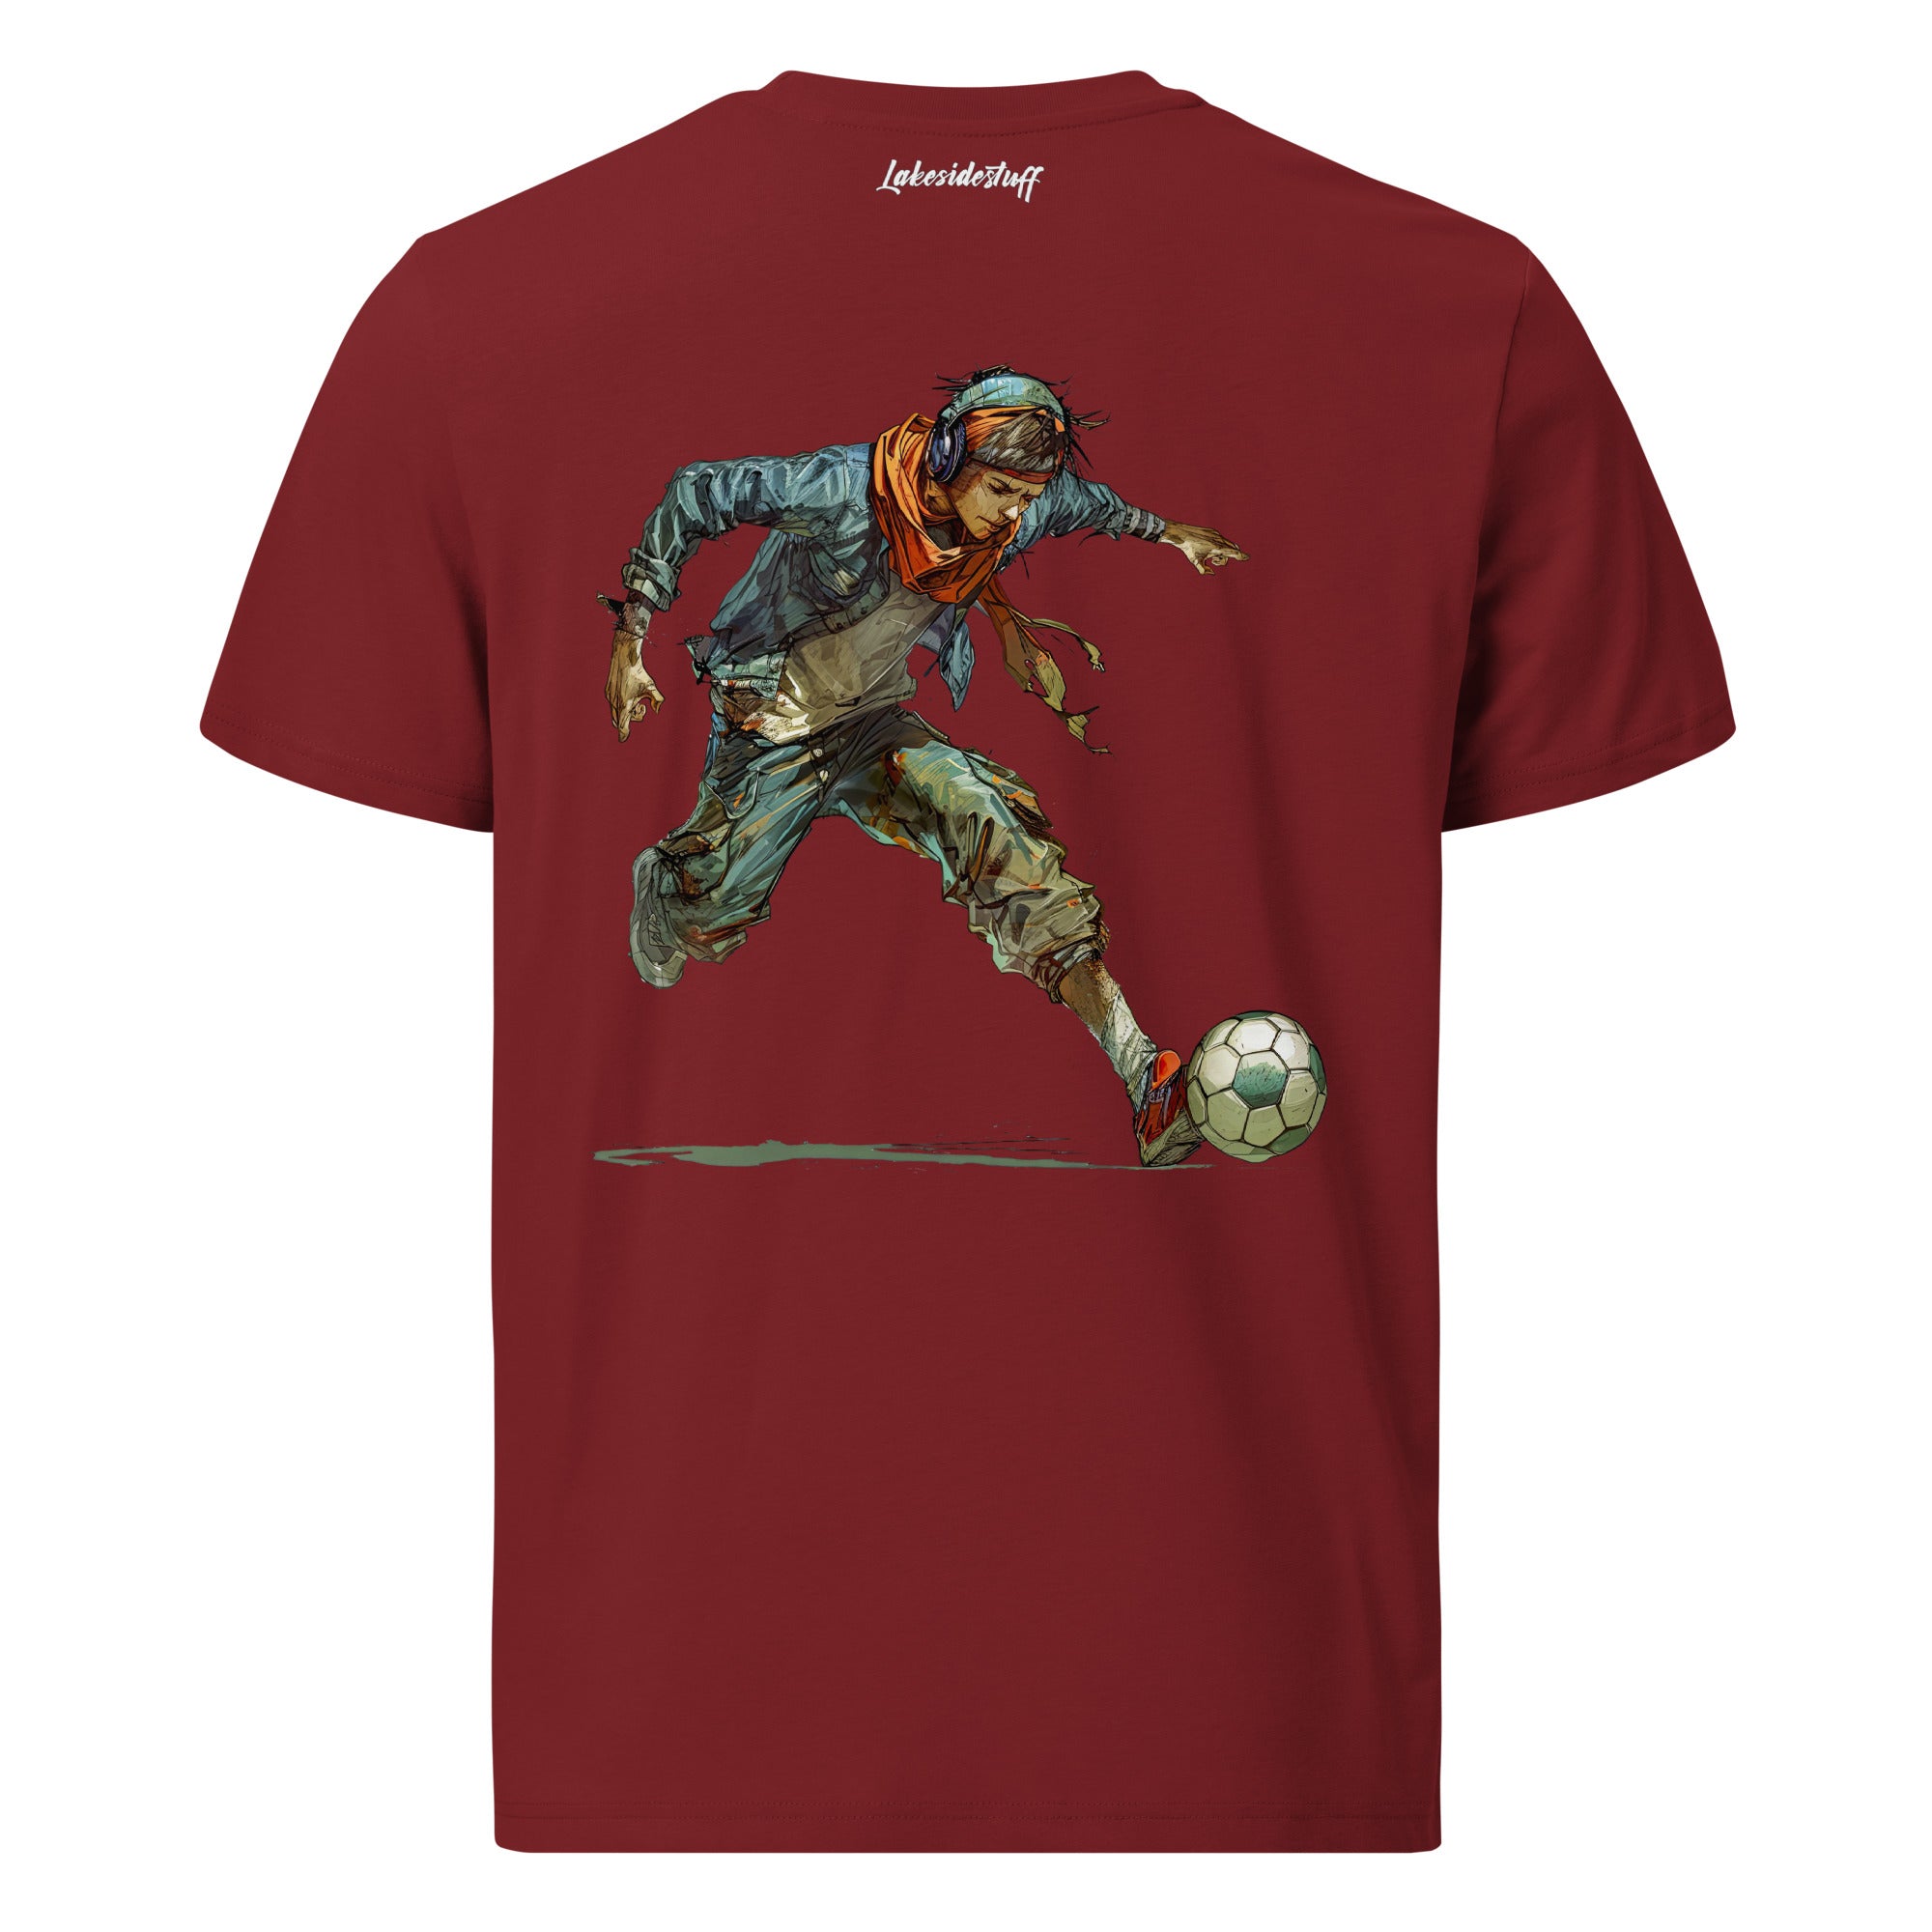 T-Shirt - Backprint - Playing Football